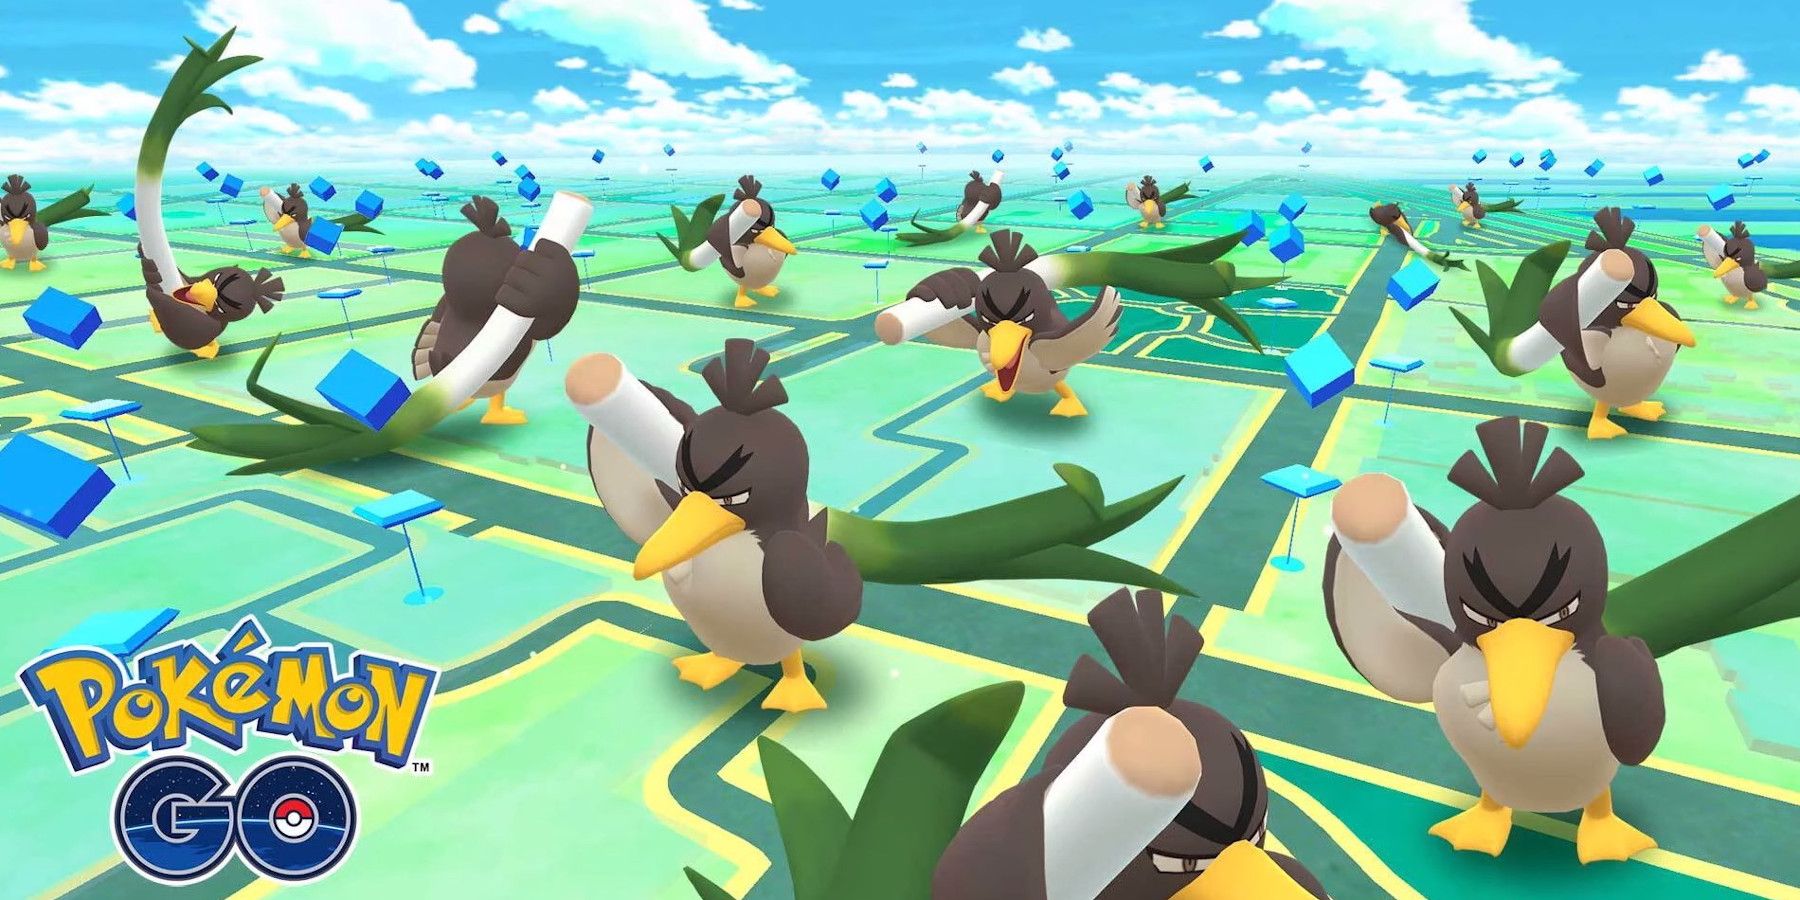 Pokémon Go event to unlock Farfetch'd